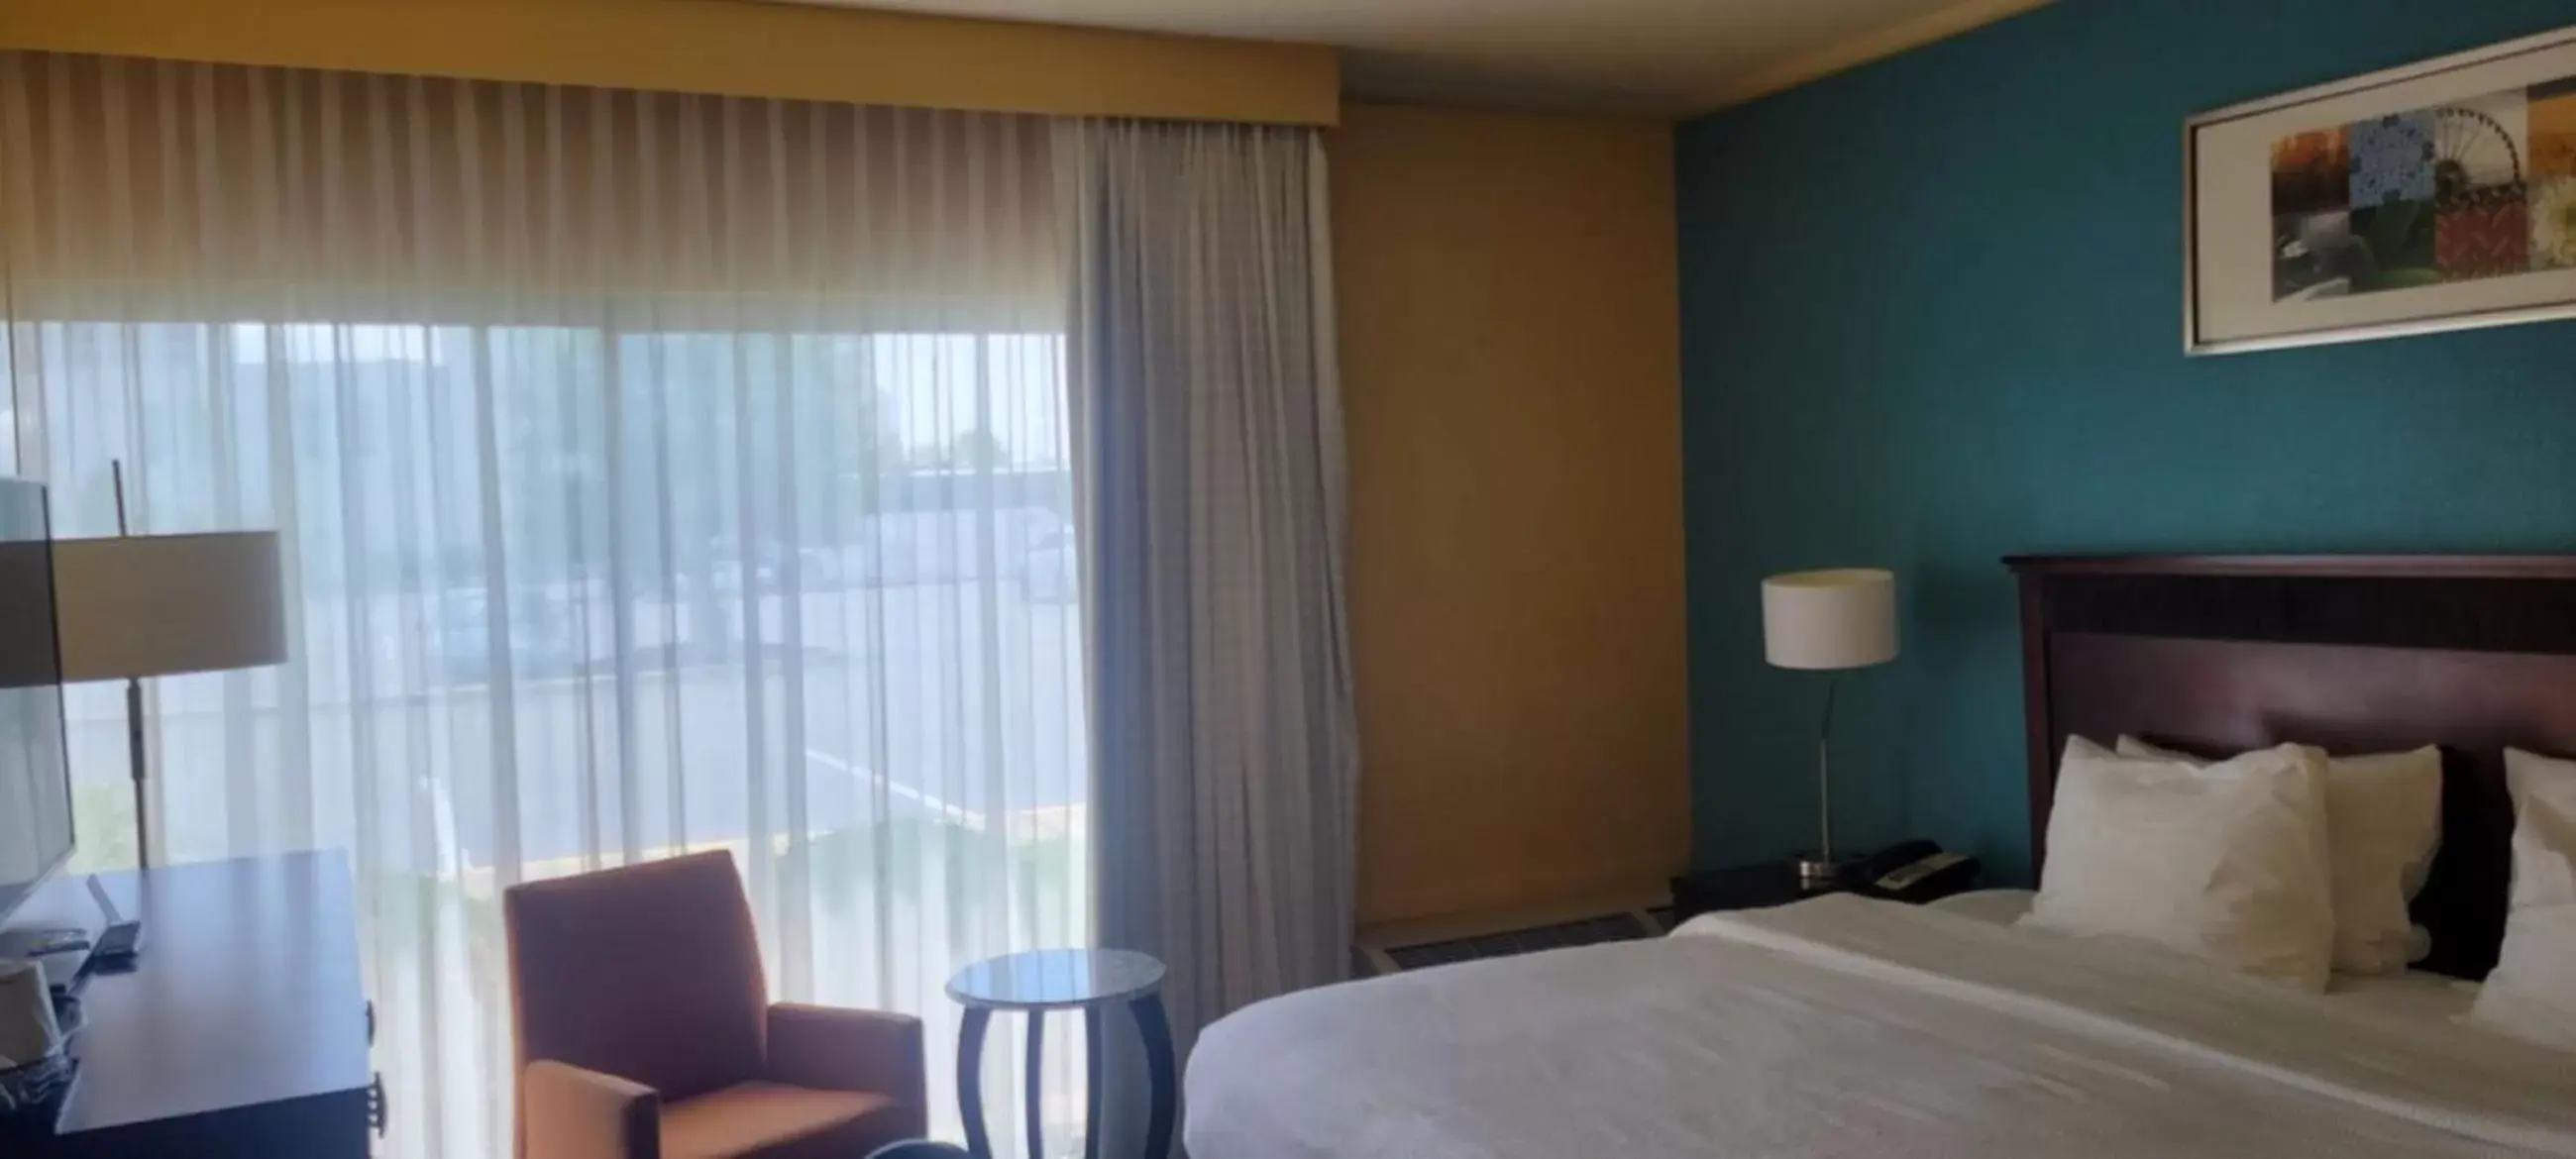 Bed in Fairfield Inn & Suites Cincinnati North/Sharonville